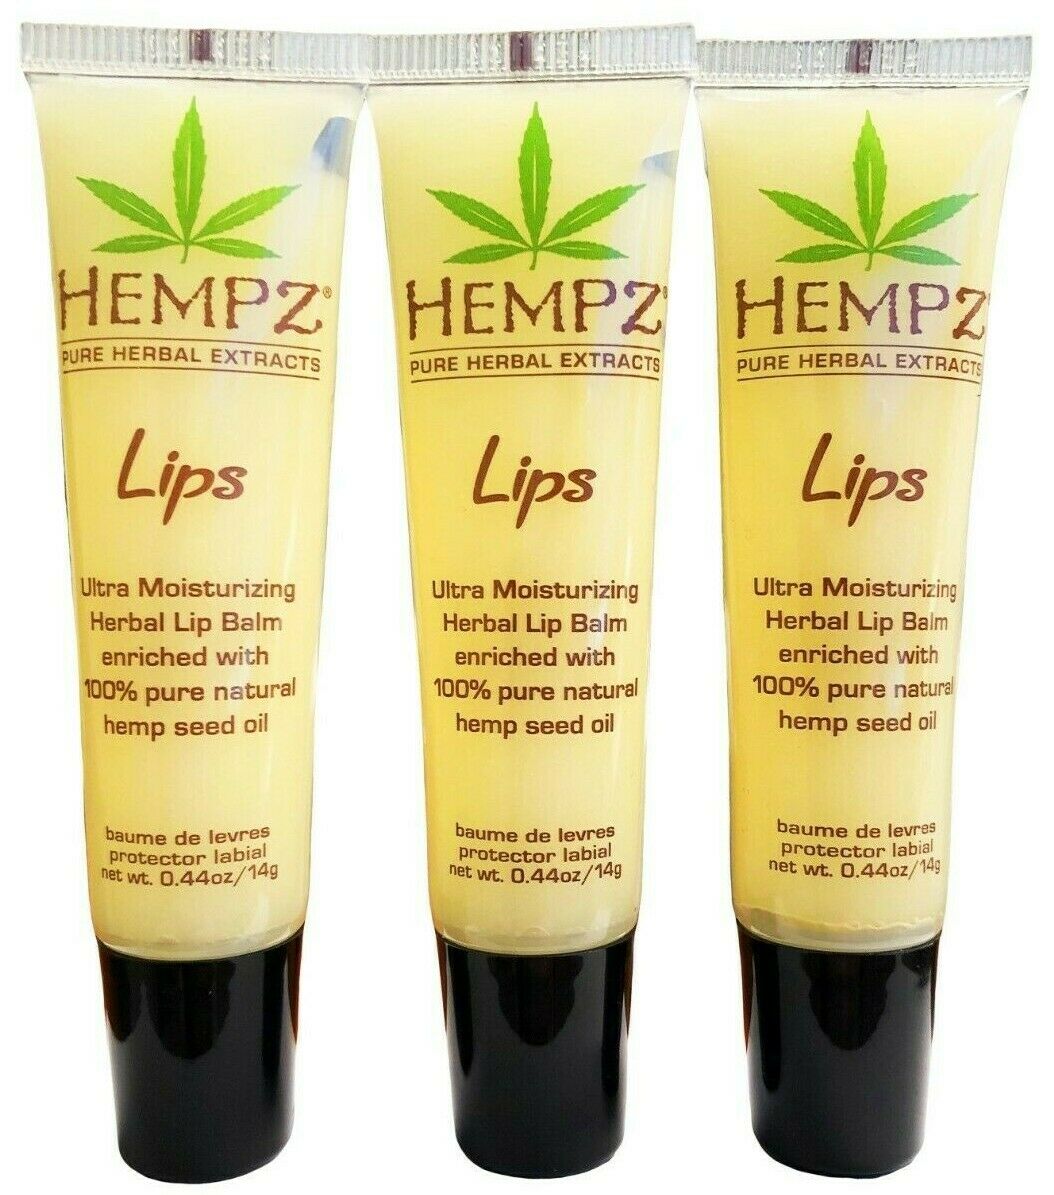 Hempz Pure Herbal Extract Lips Ultra Moisturizing Herbal Lip Balm .44oz Set Of 3